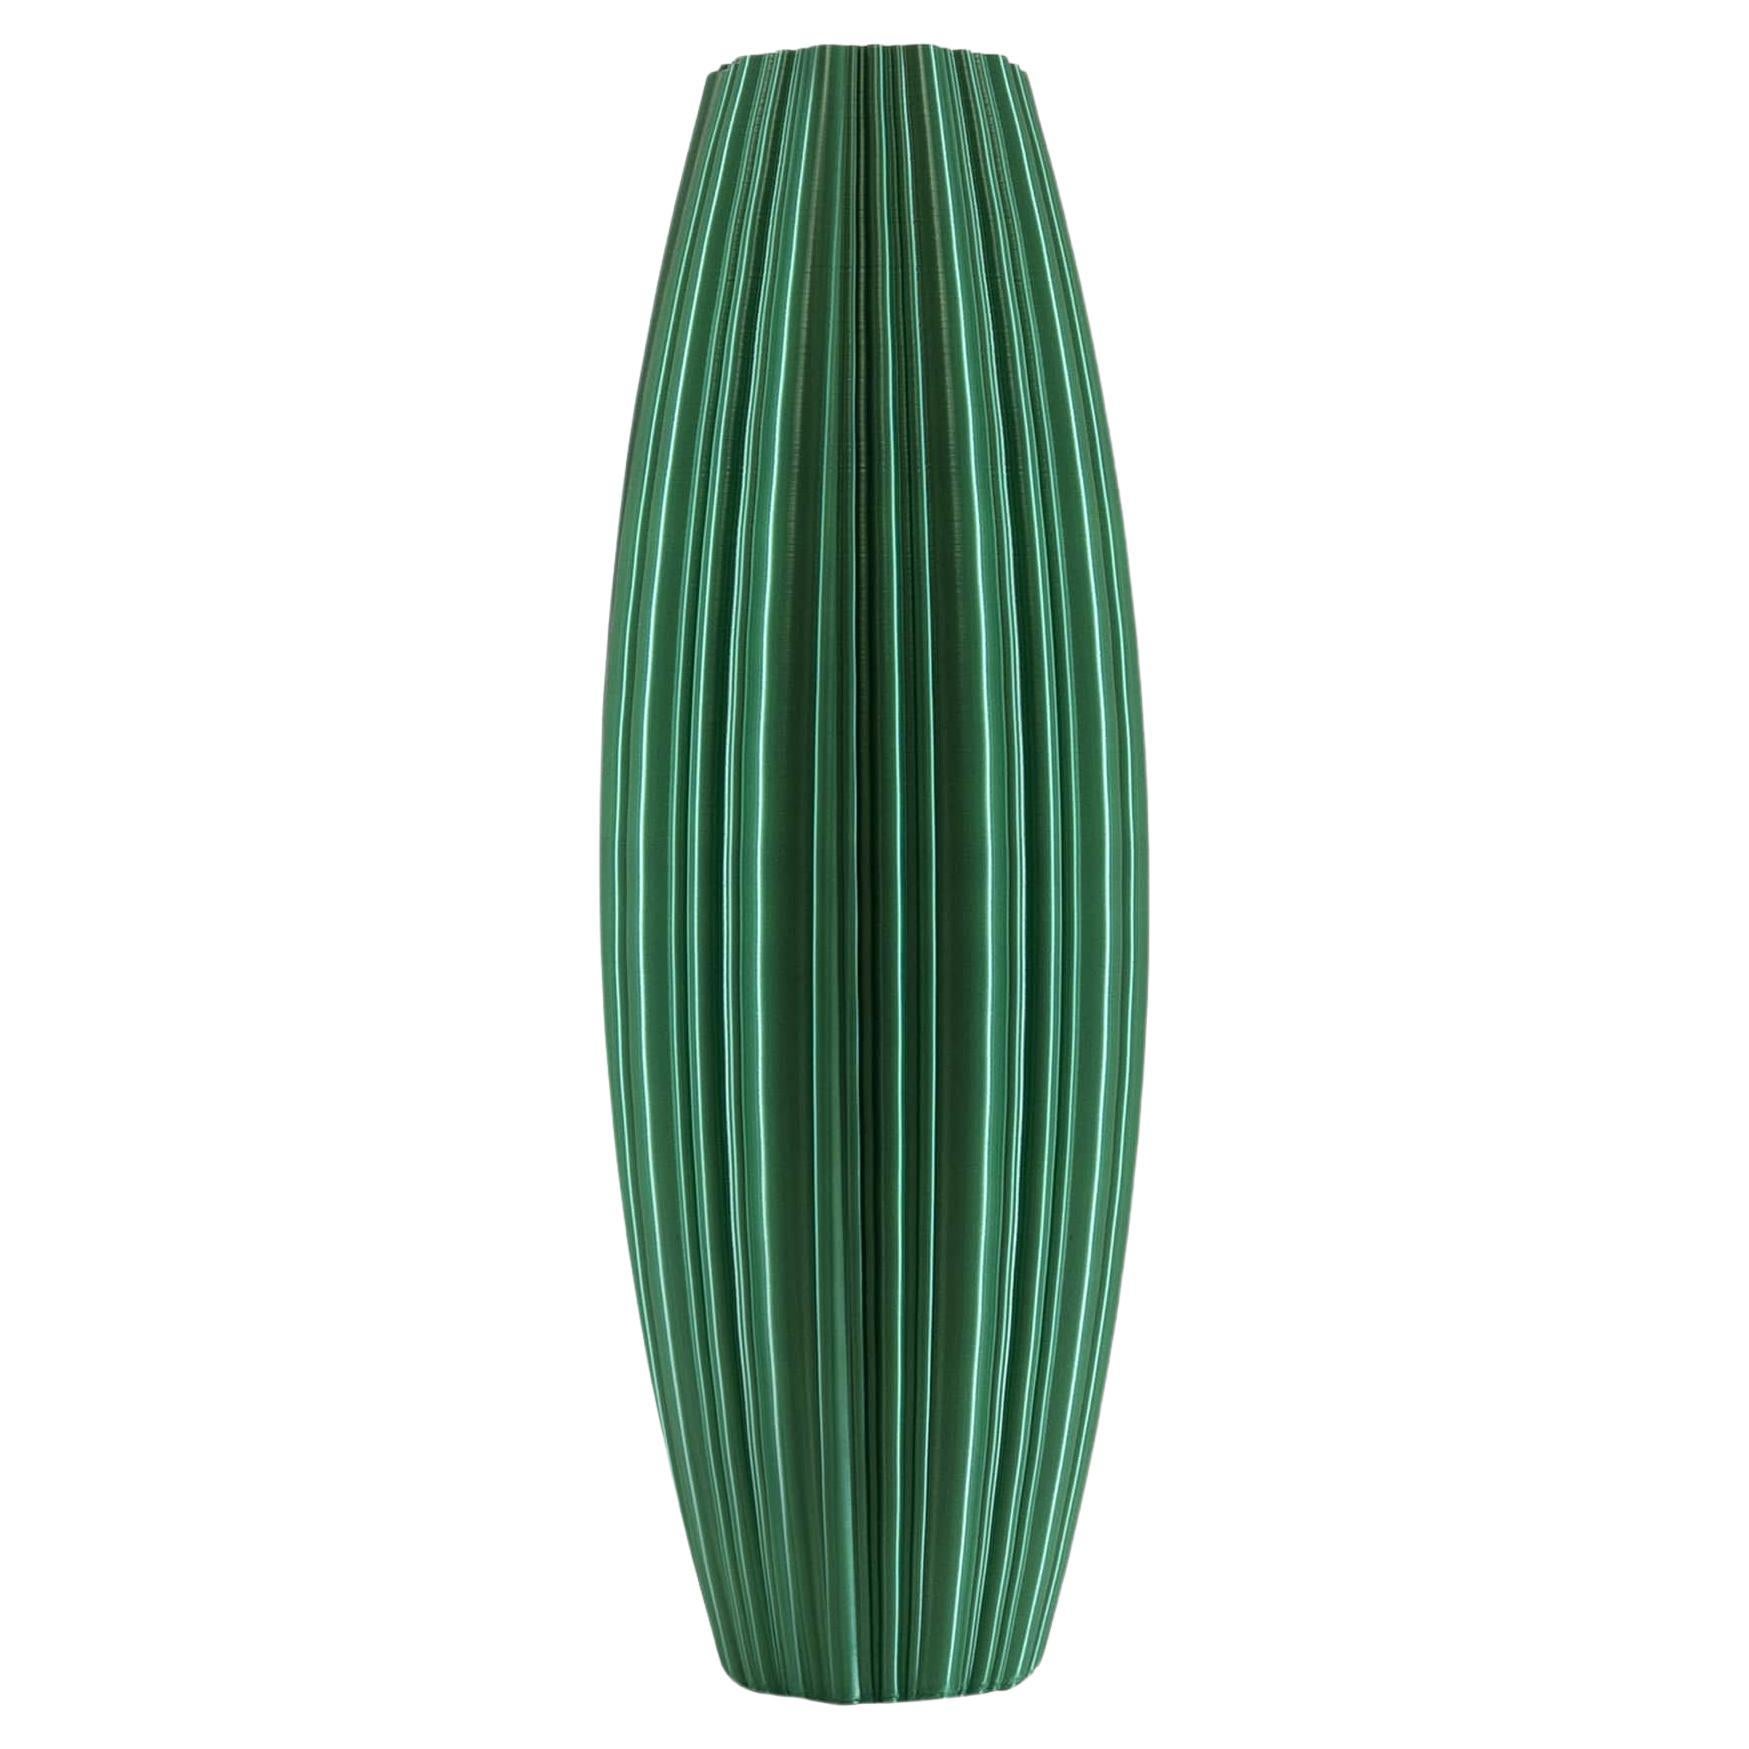 Pandora, vase-sculpture durable contemporain vert